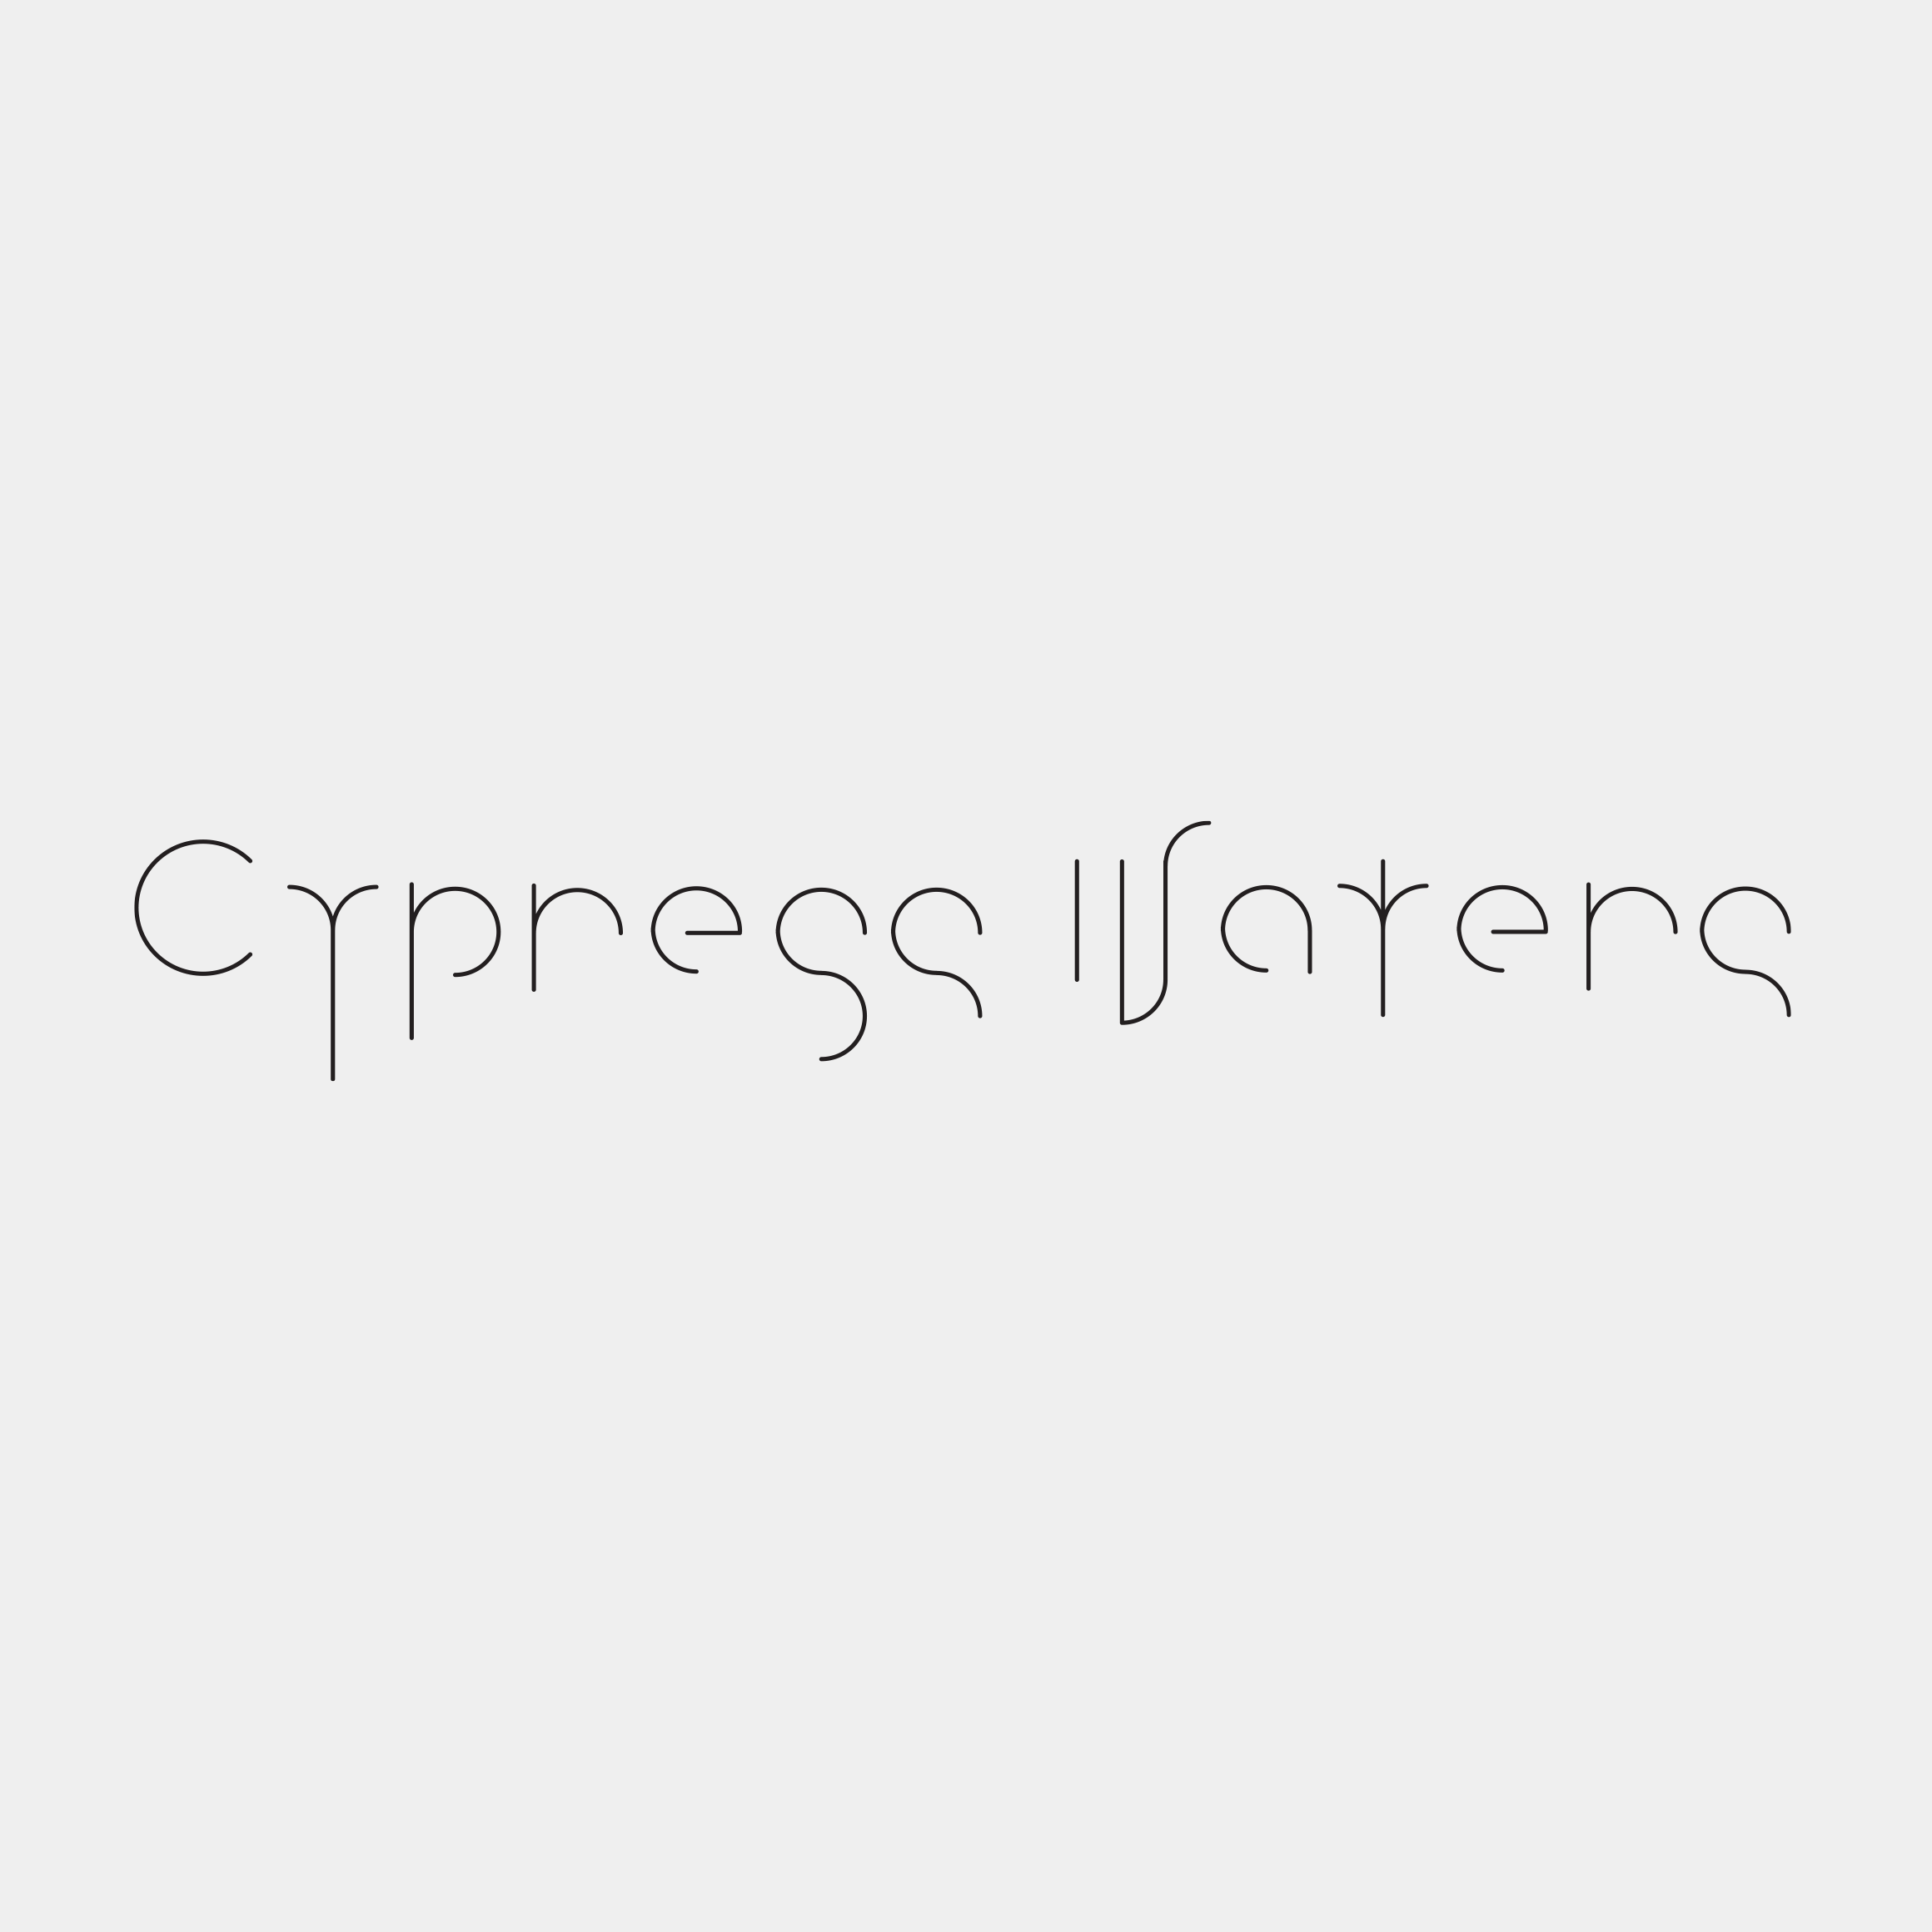 cypress waters logo